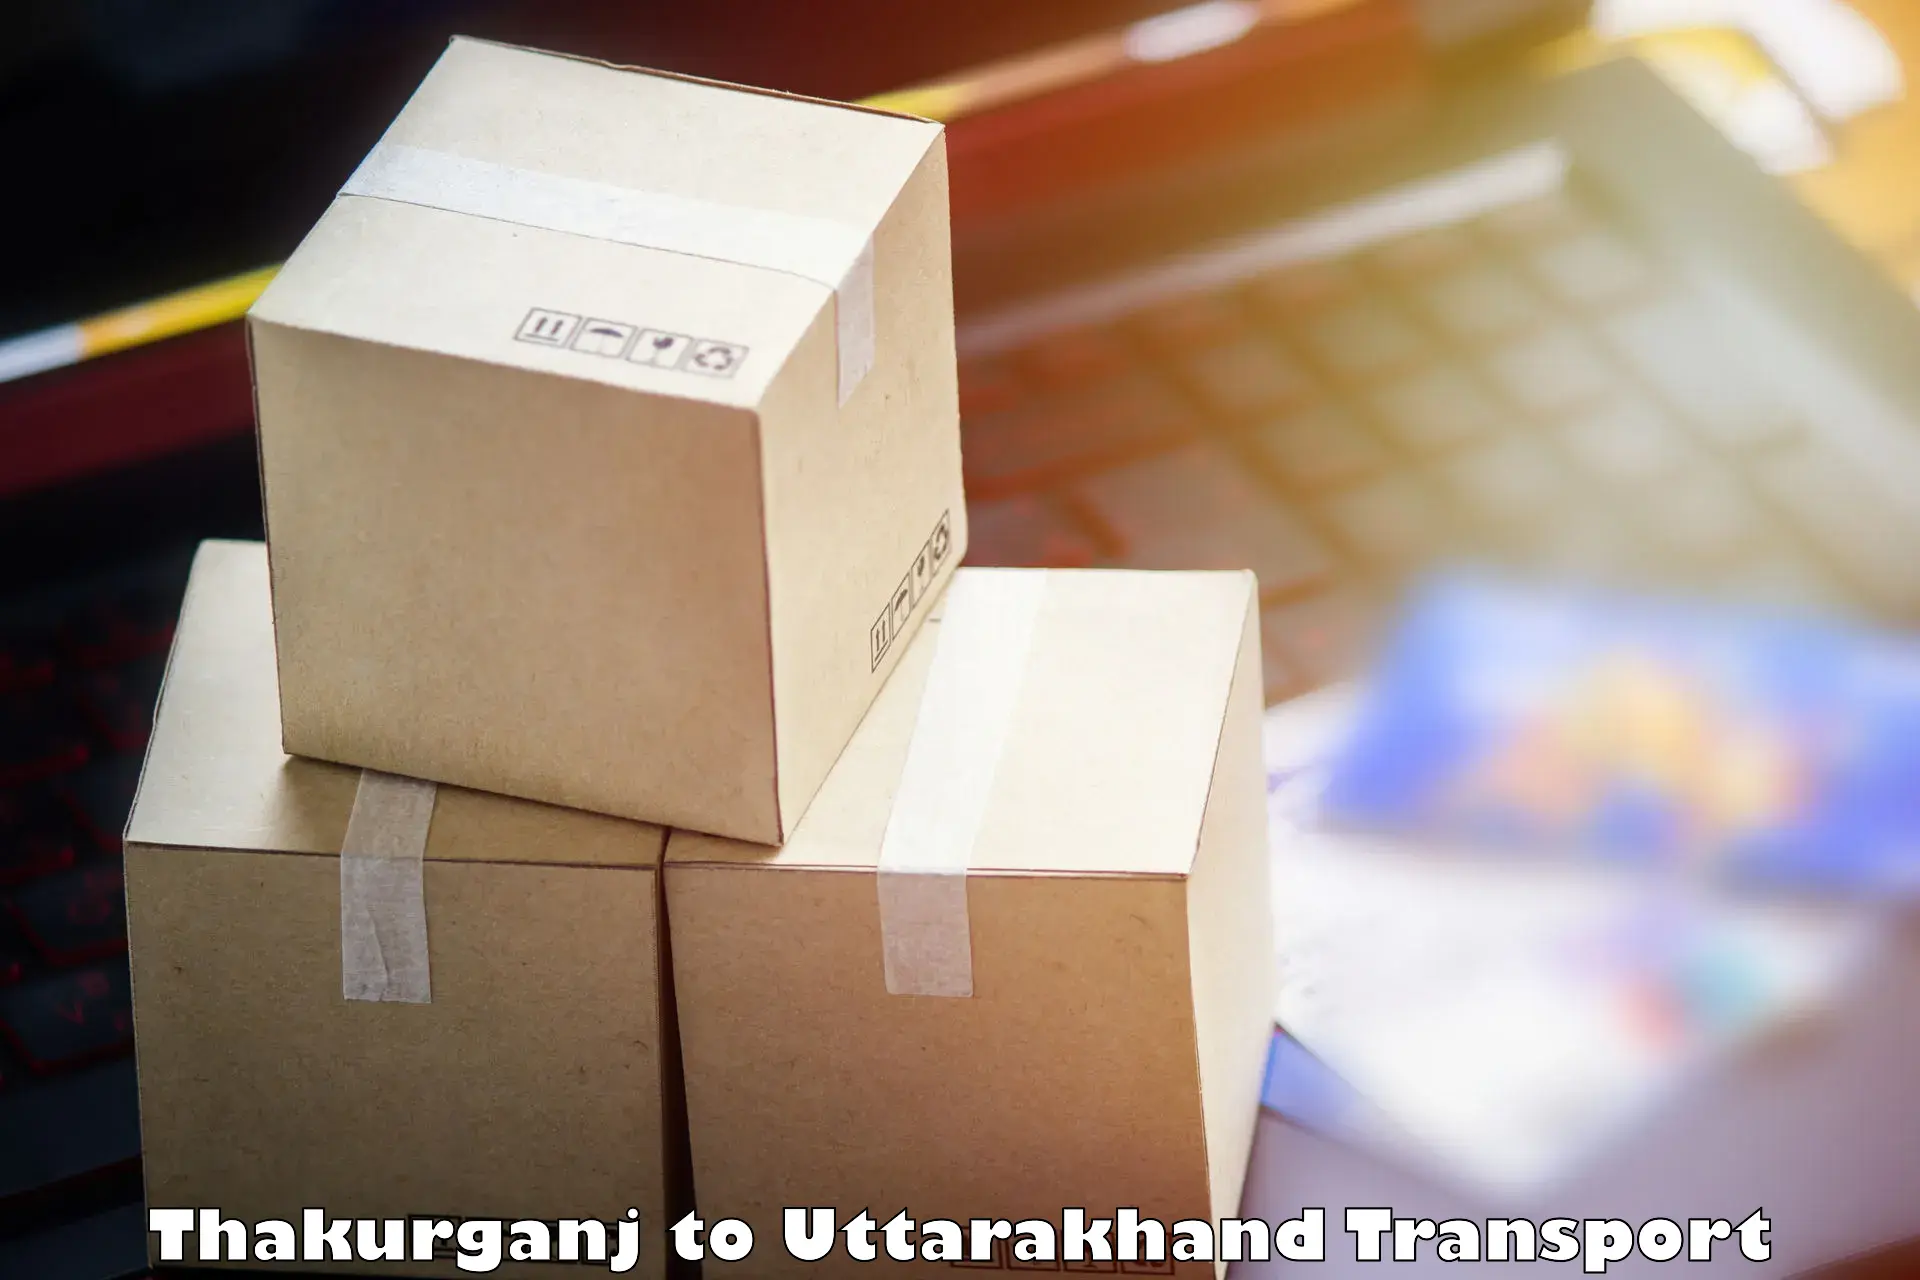 Truck transport companies in India Thakurganj to Rudraprayag